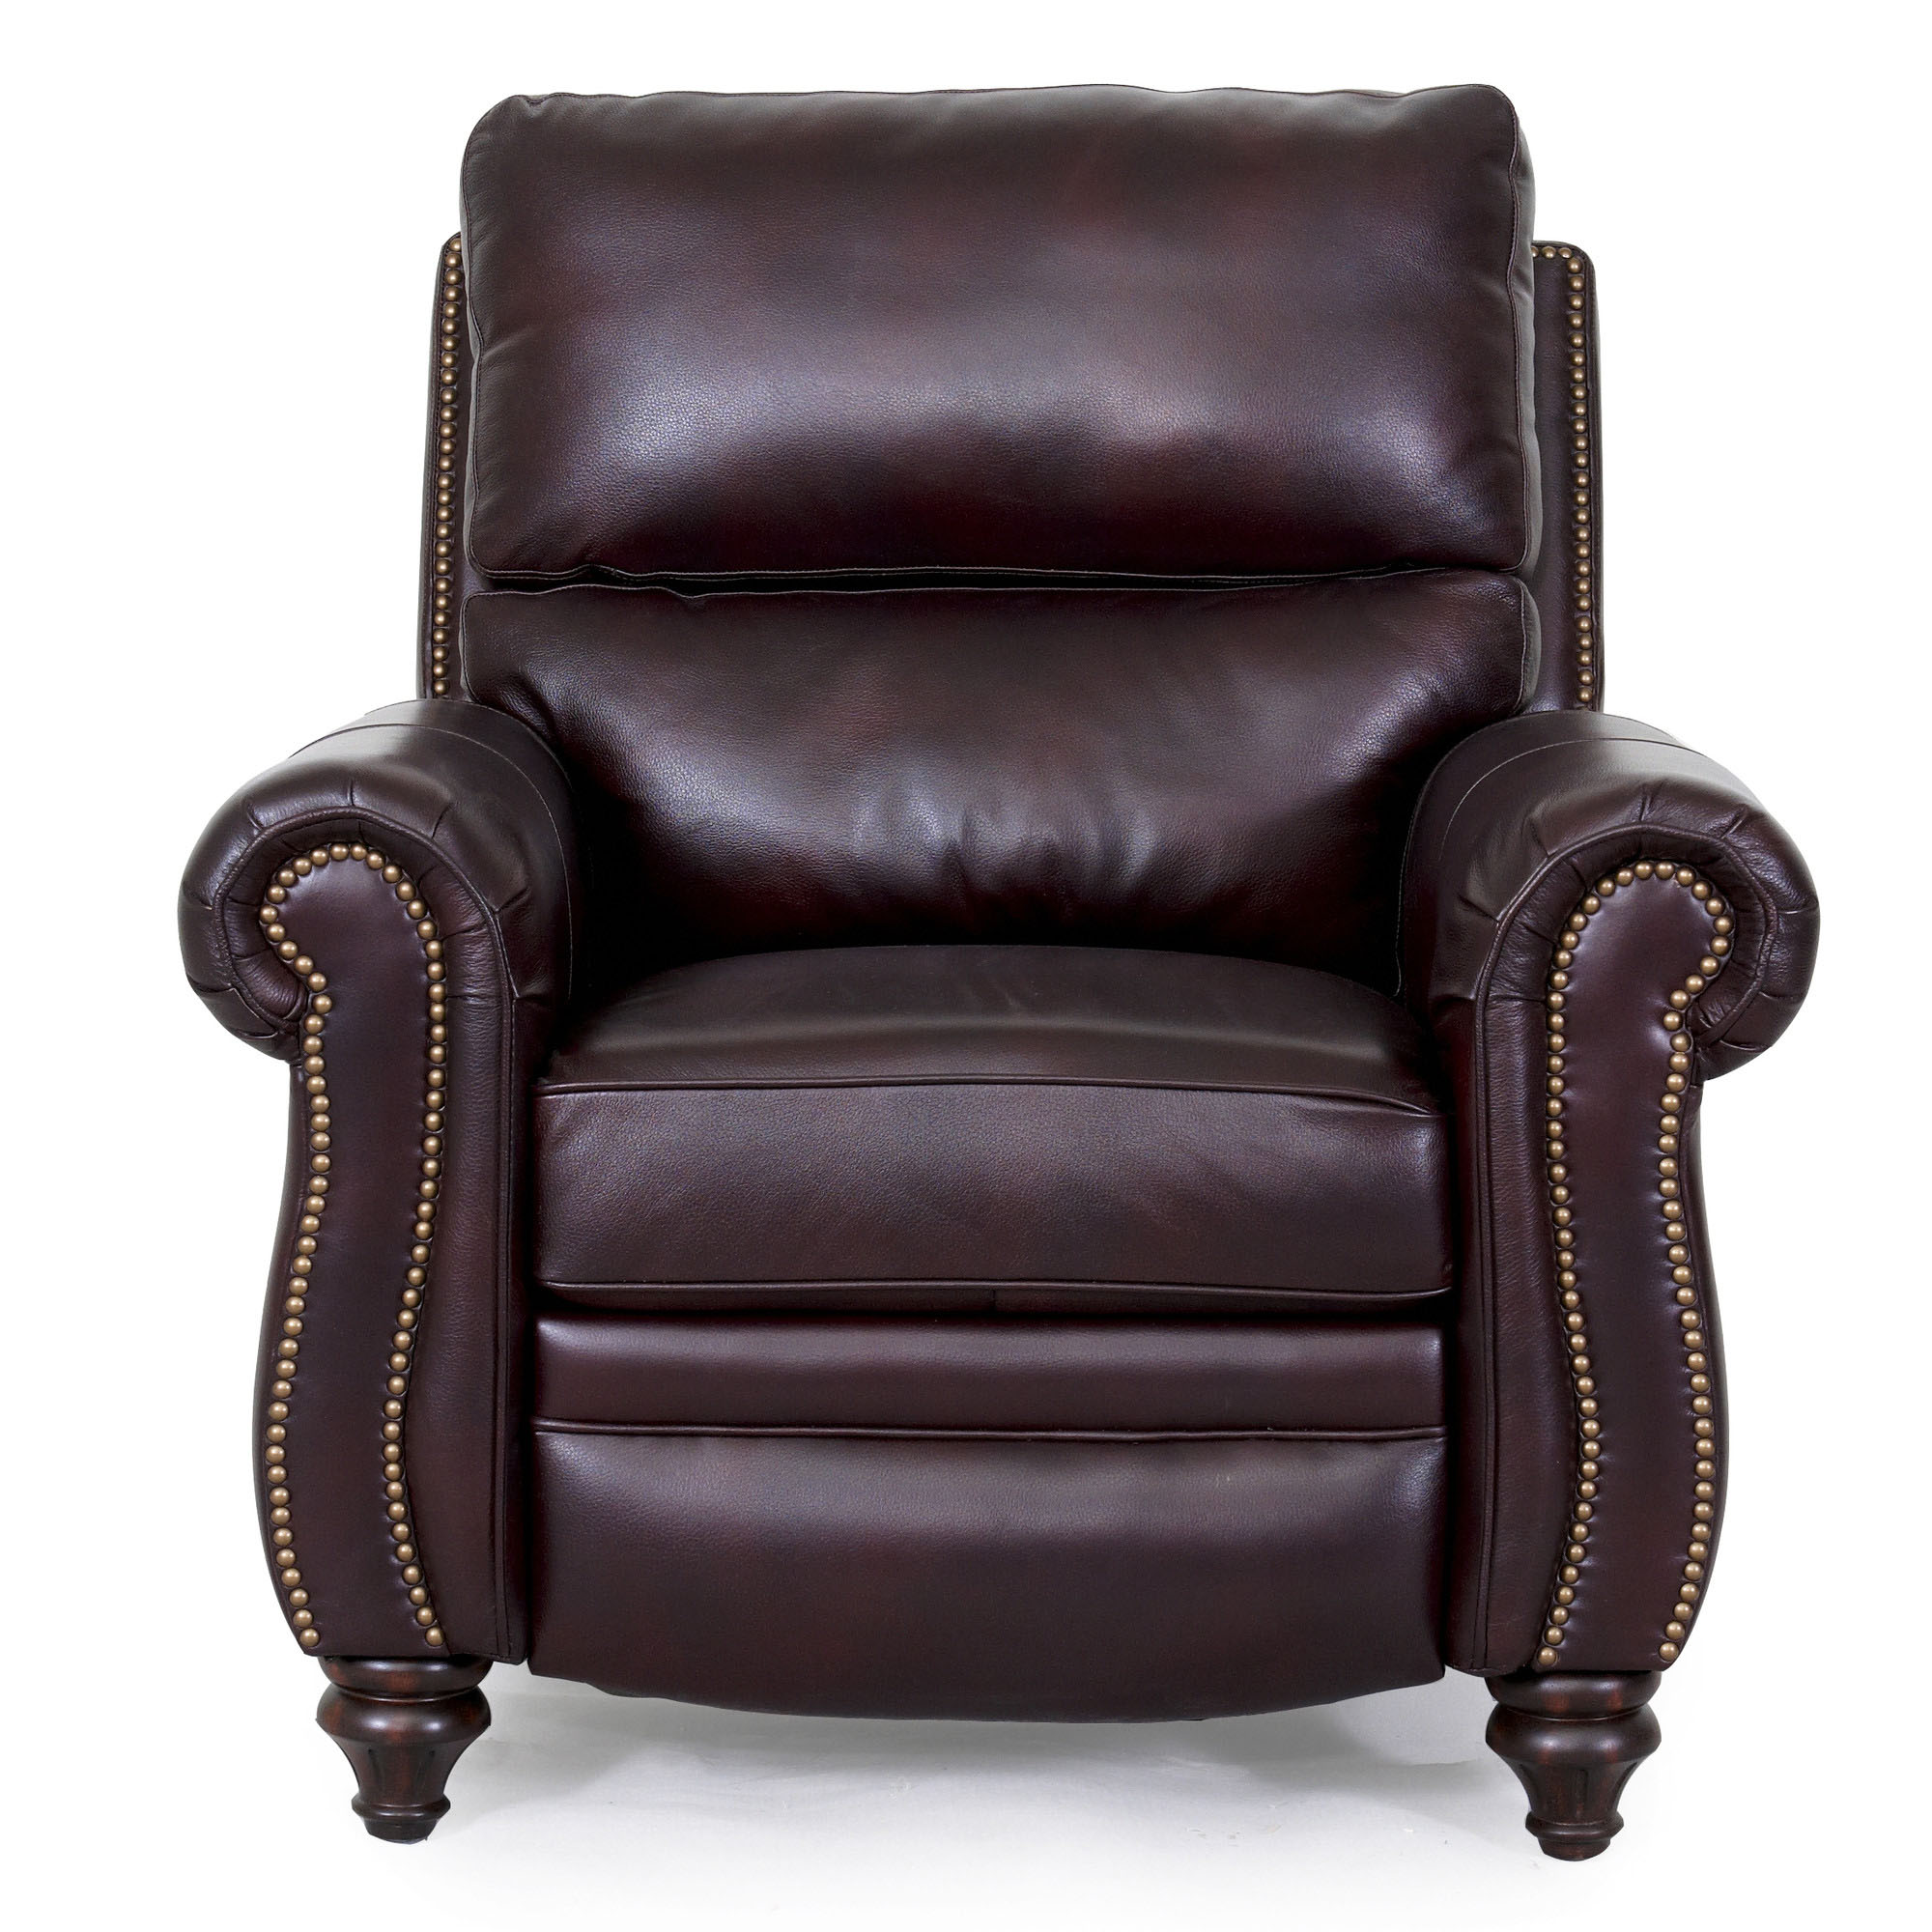 Barcalounger Dalton II Recliner Chair - Leather Recliner Chair